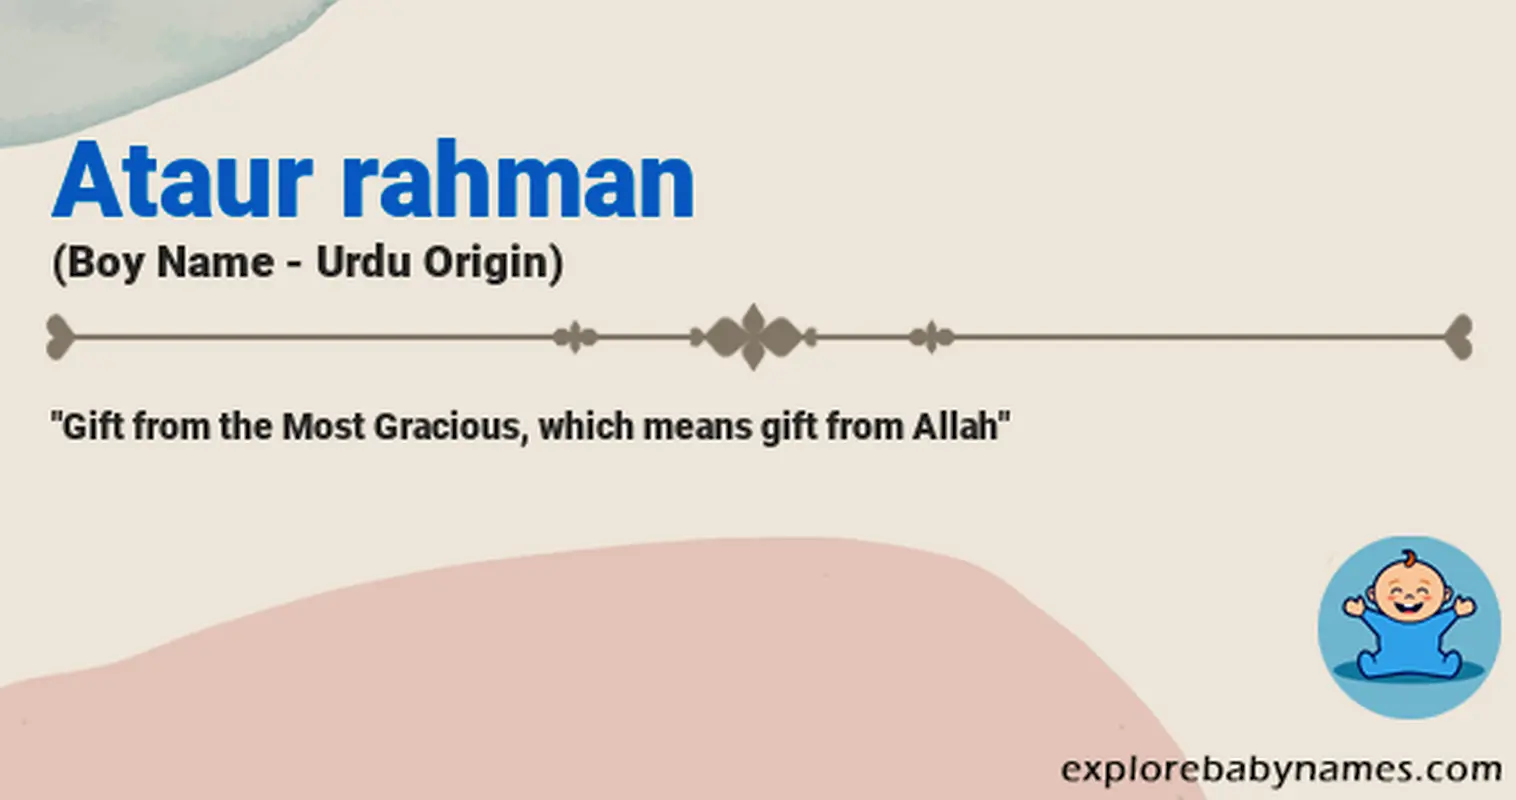 Meaning of Ataur rahman